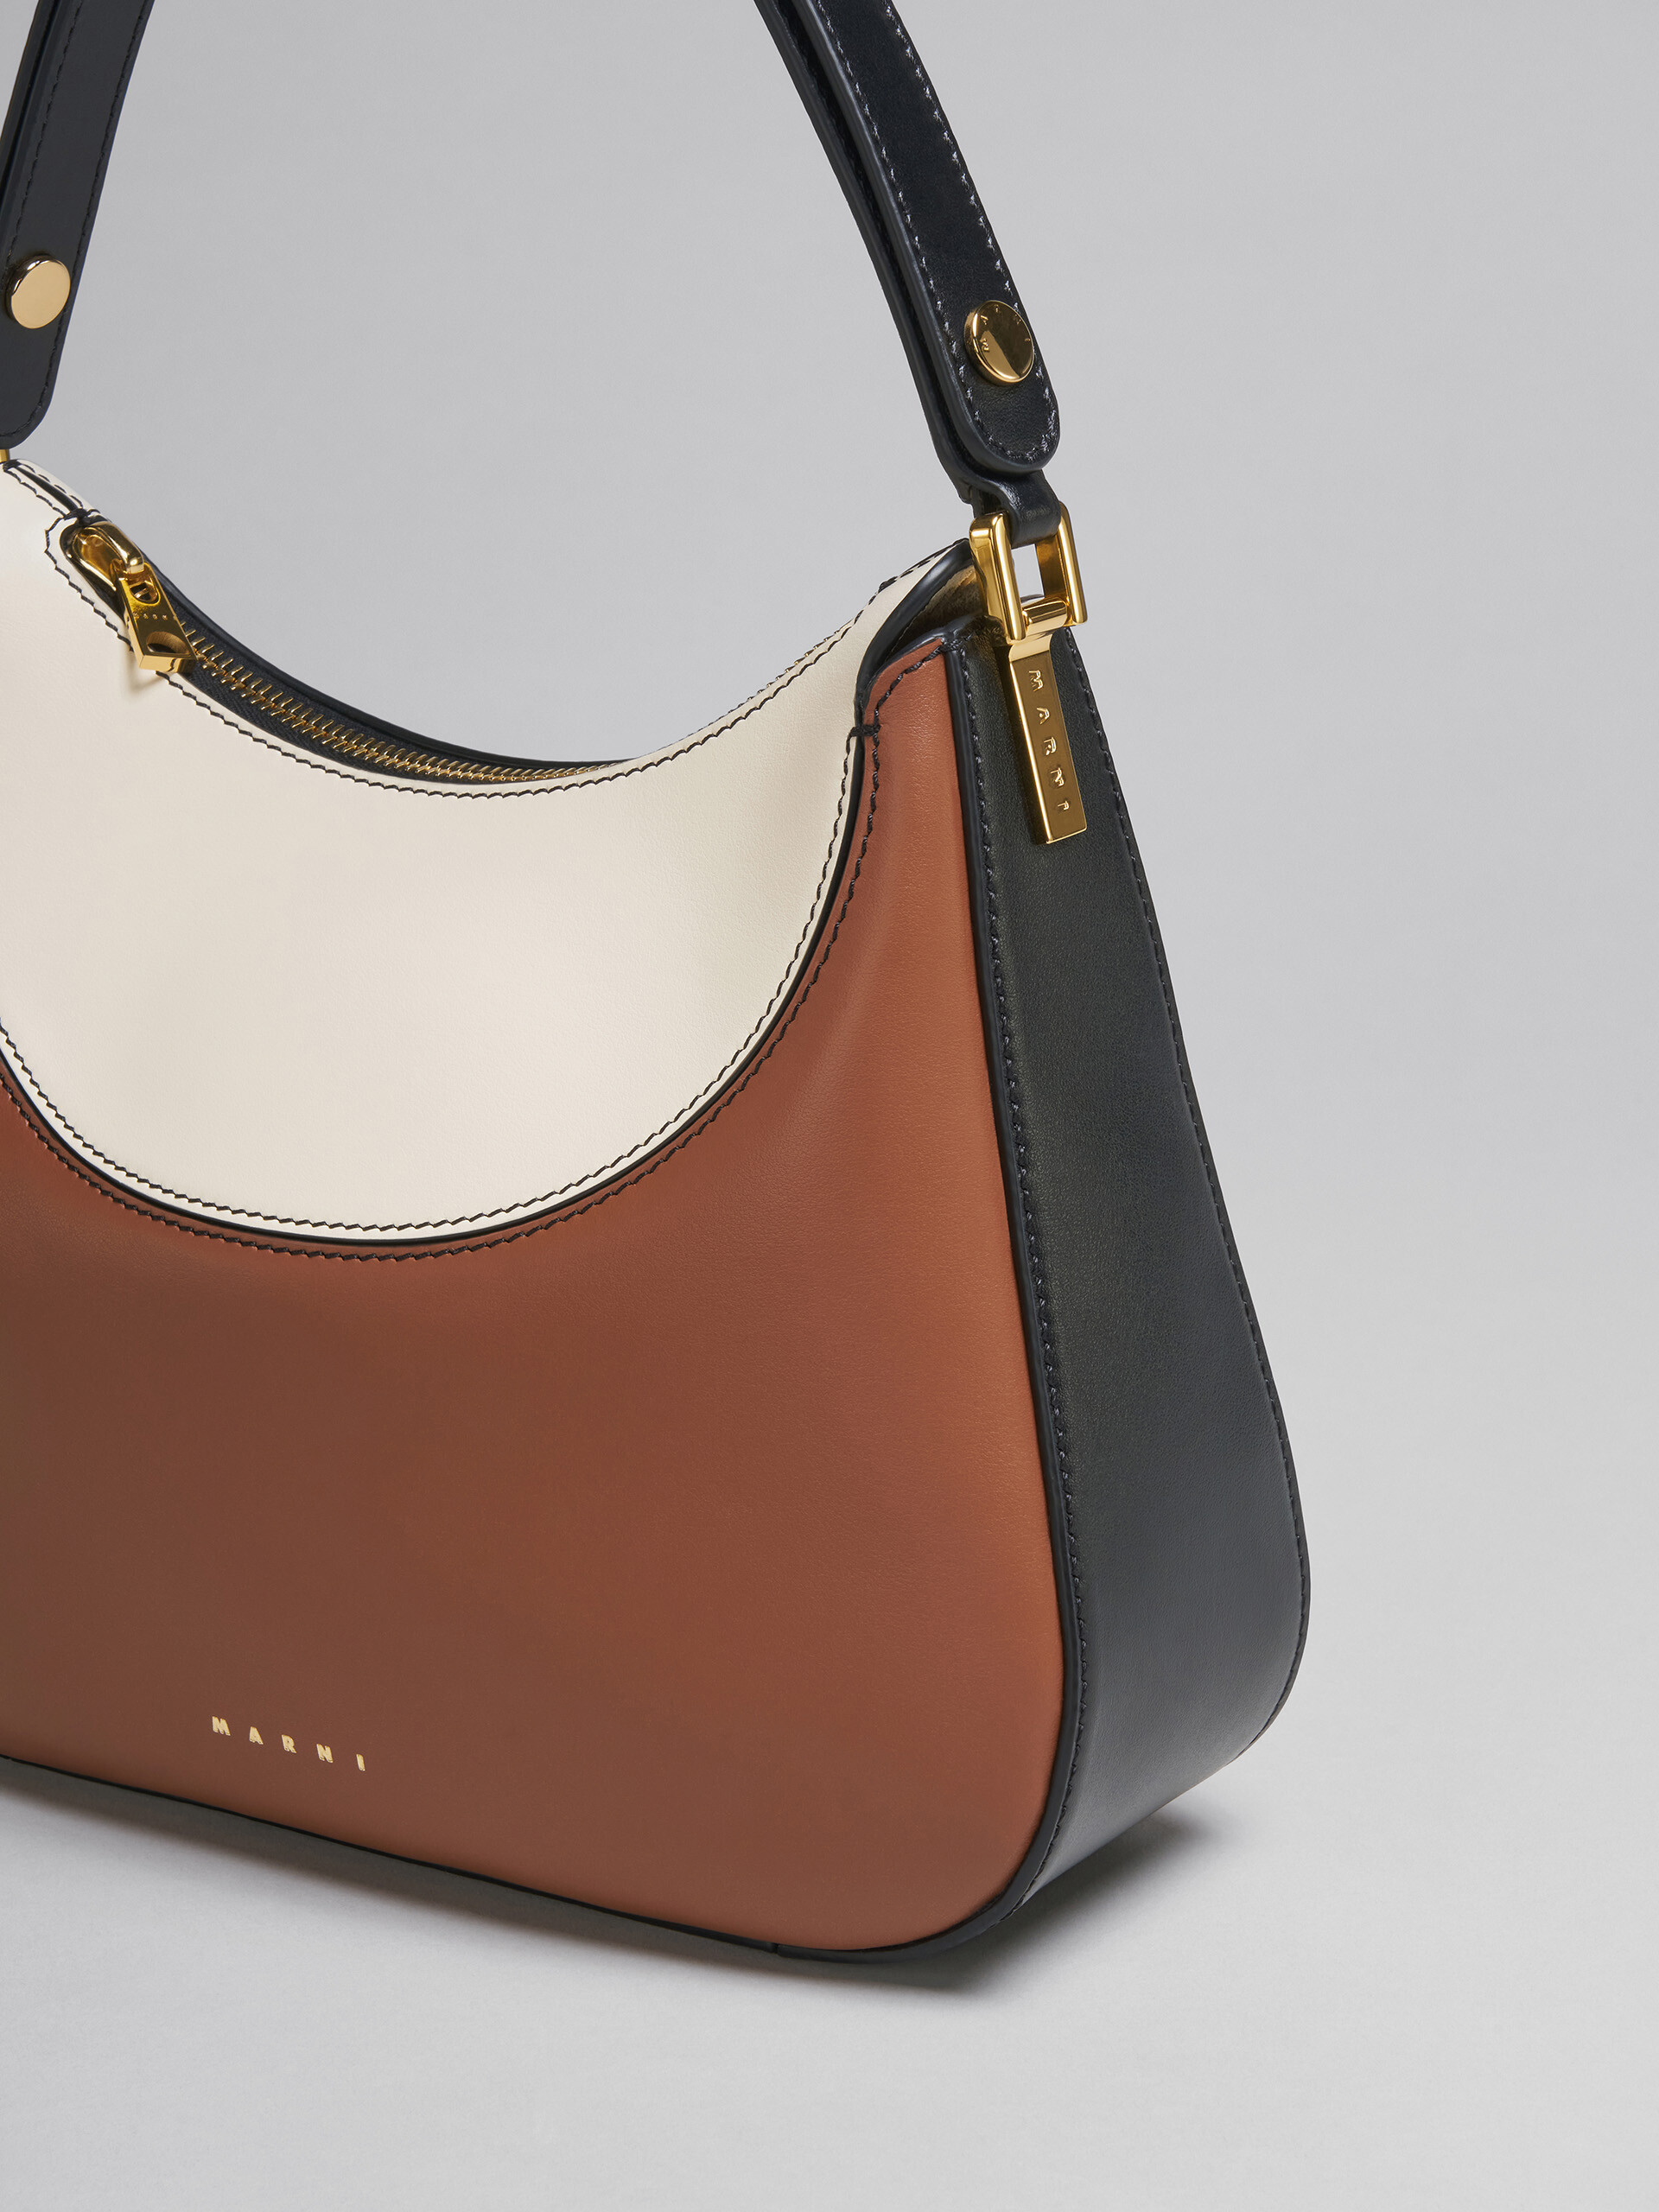 Milano small bag in brown black and white - Handbag - Image 5